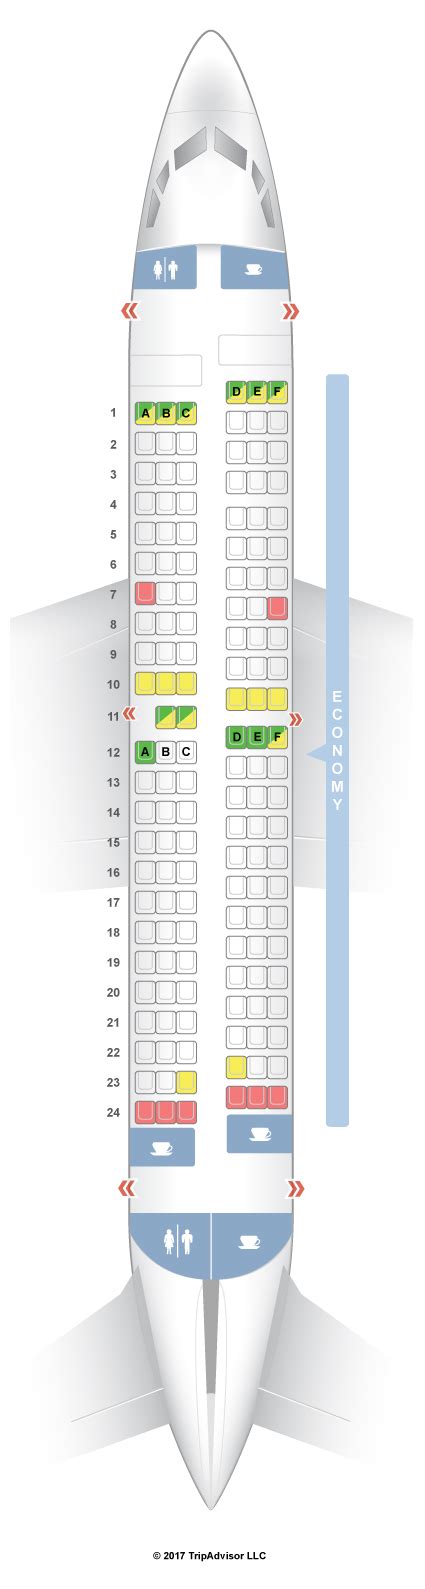 southwest 737-700 seat map